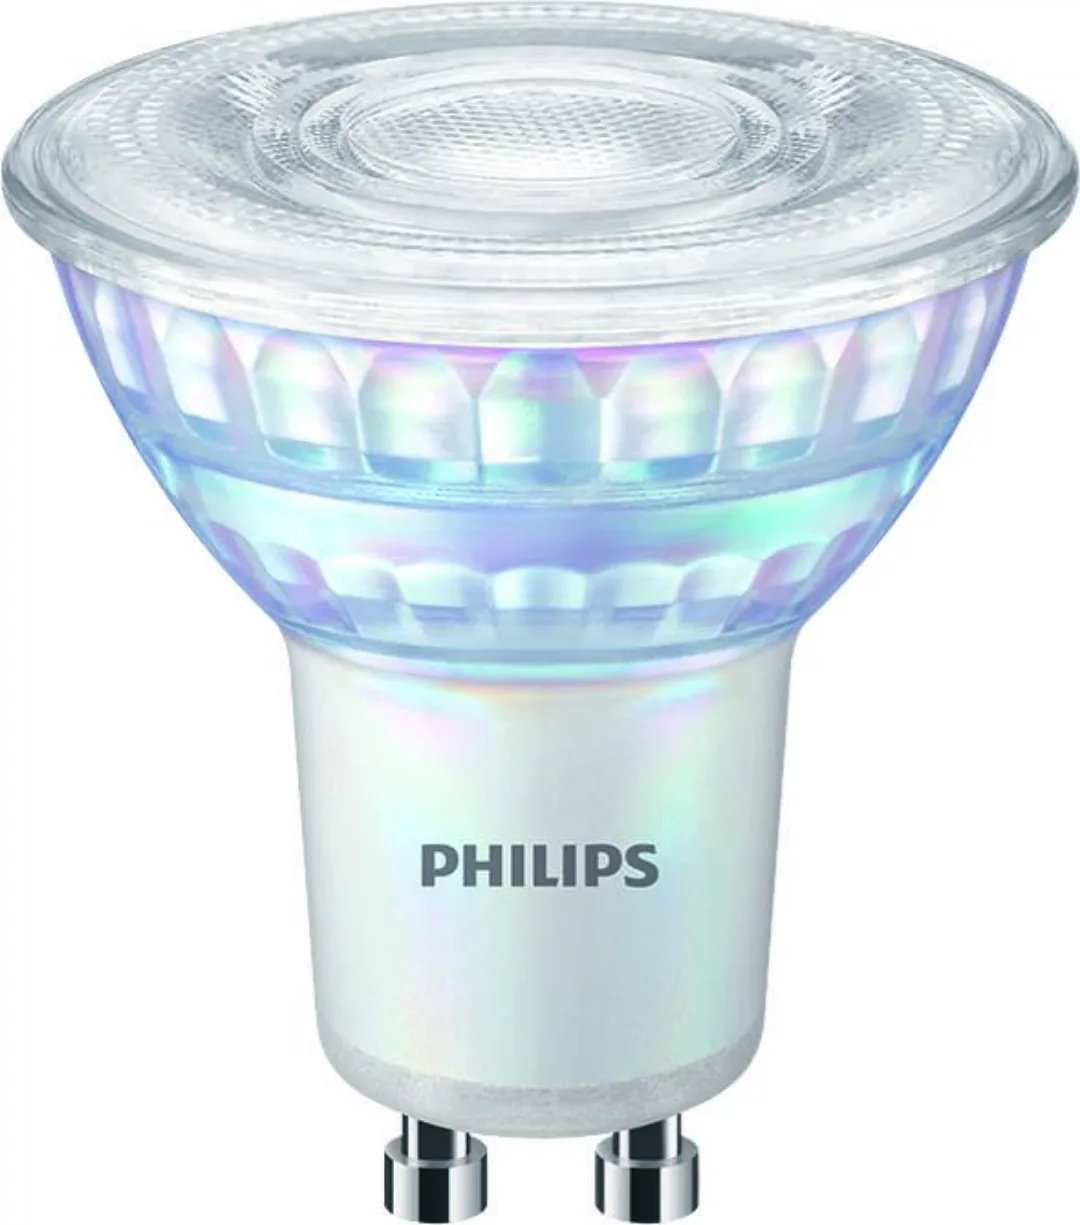 Philips Lighting LED-Reflektorlampe PAR16 GU10 827 DIM CorePro LED#72133900 günstig online kaufen